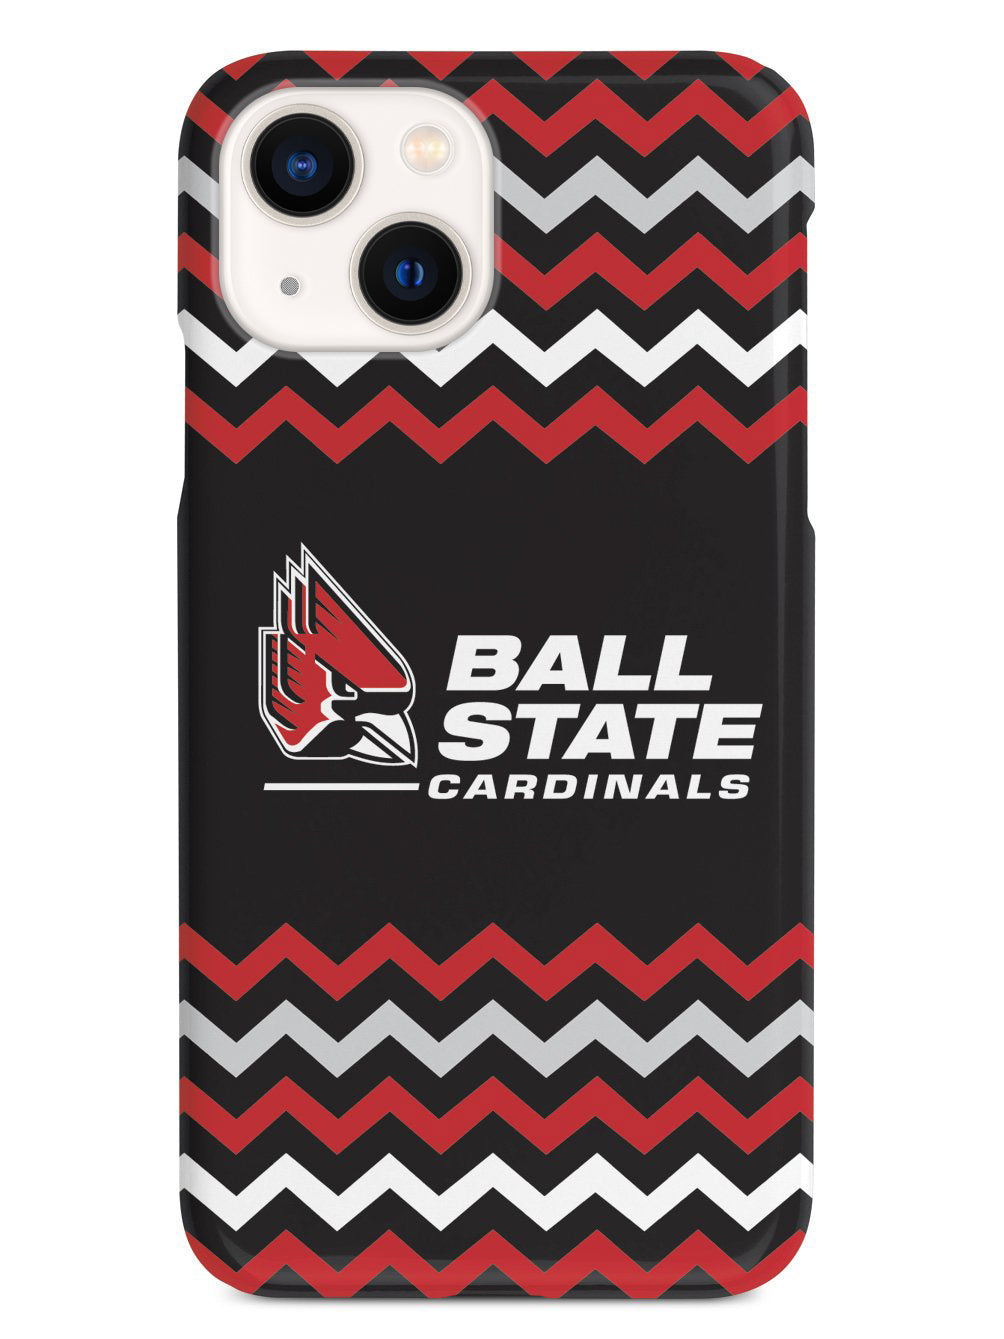 Ball State Cardinals - Chevron Case